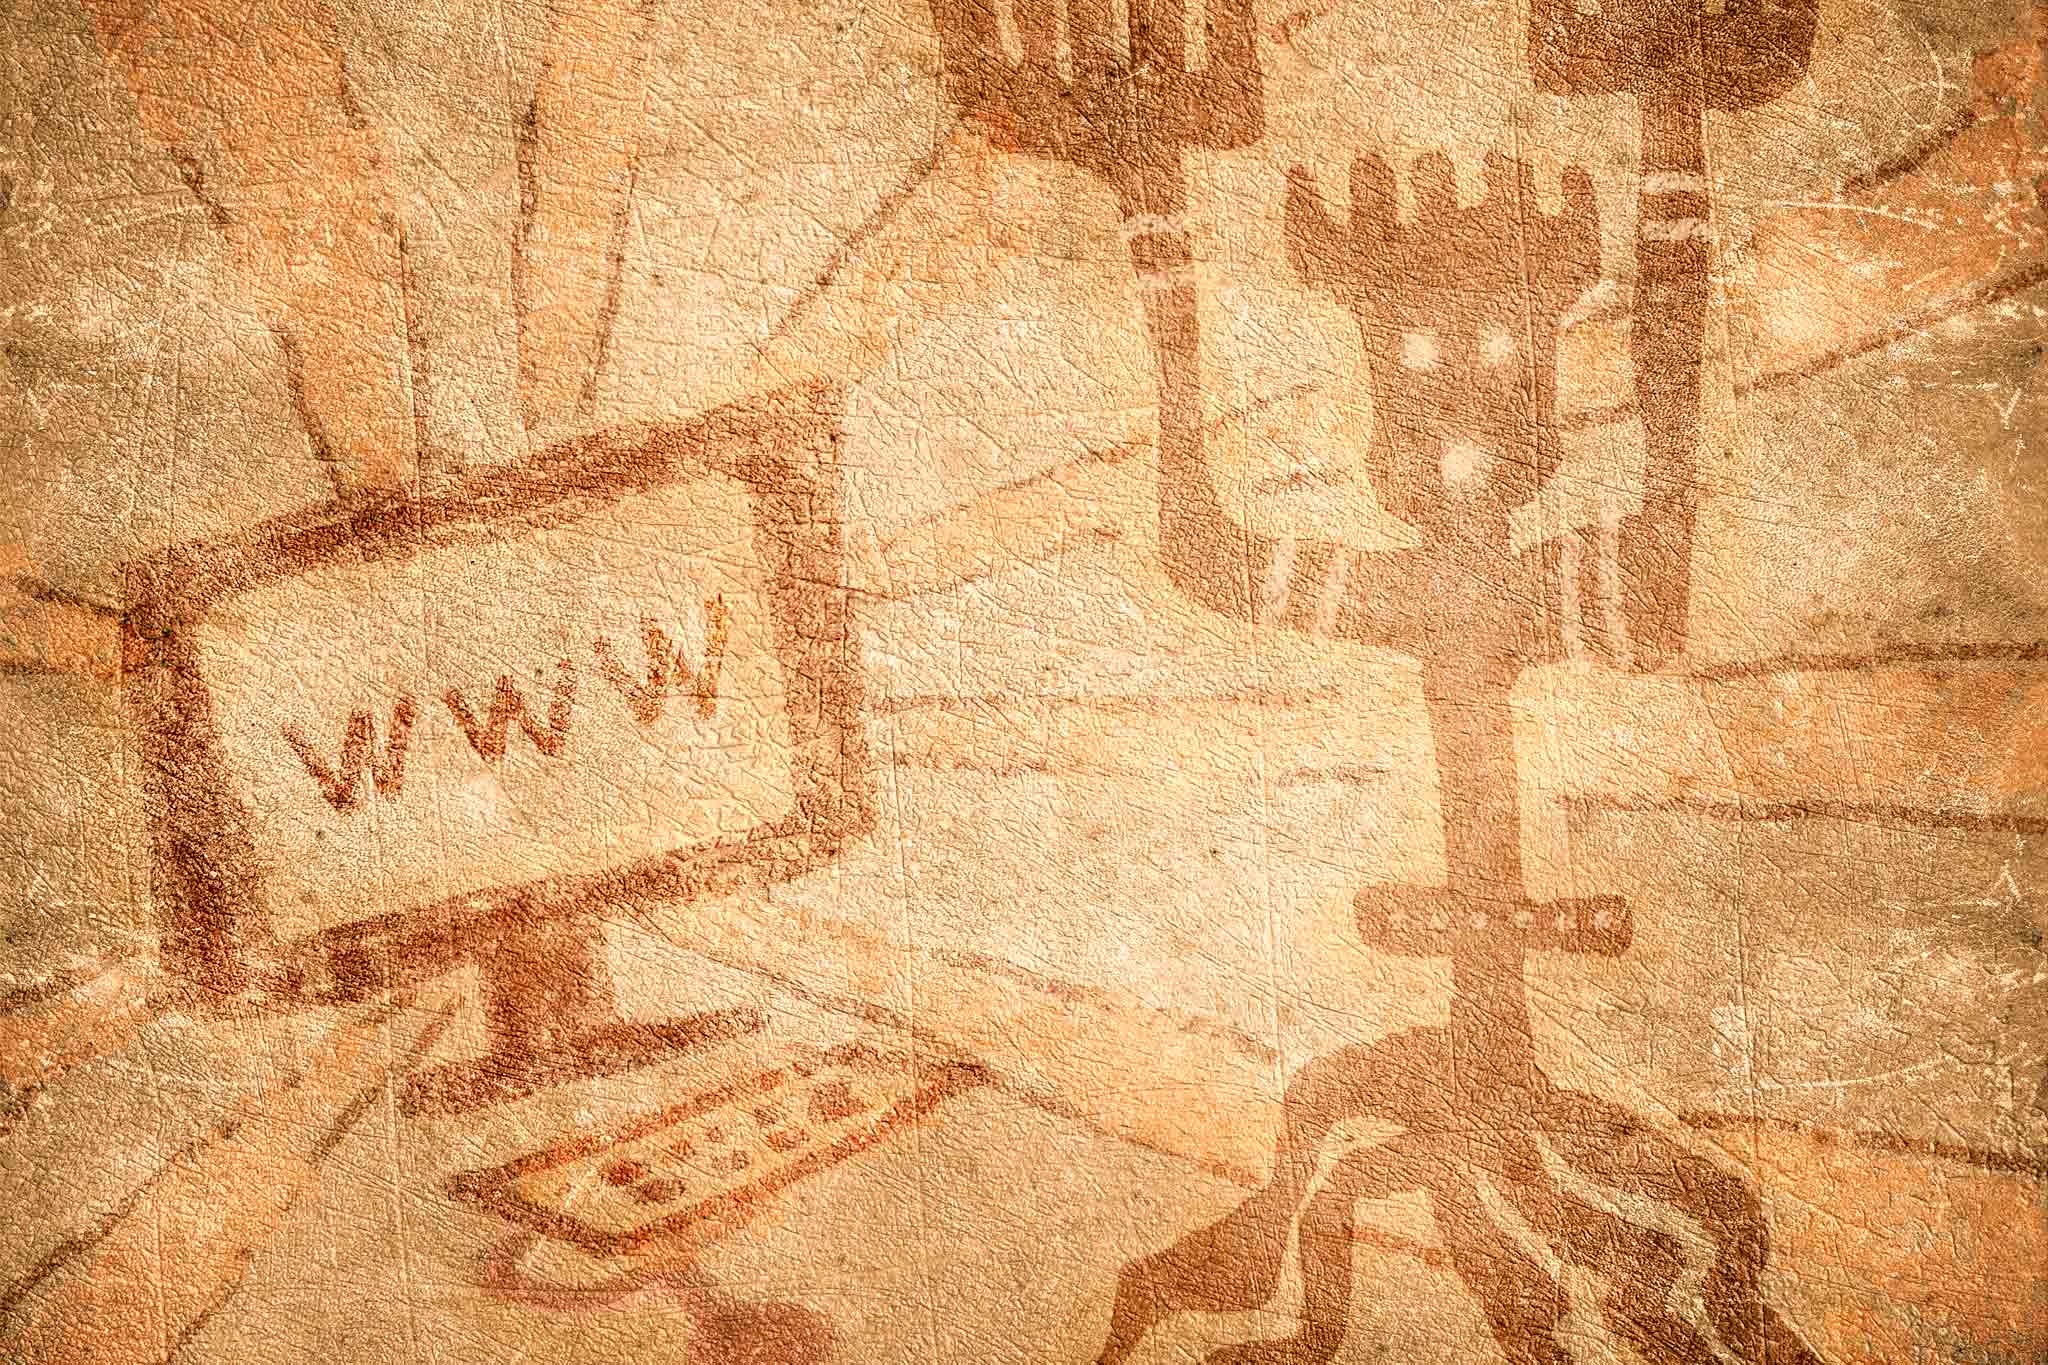 Prehistoric painting with computer on line. Image: iStock.com/lolloj